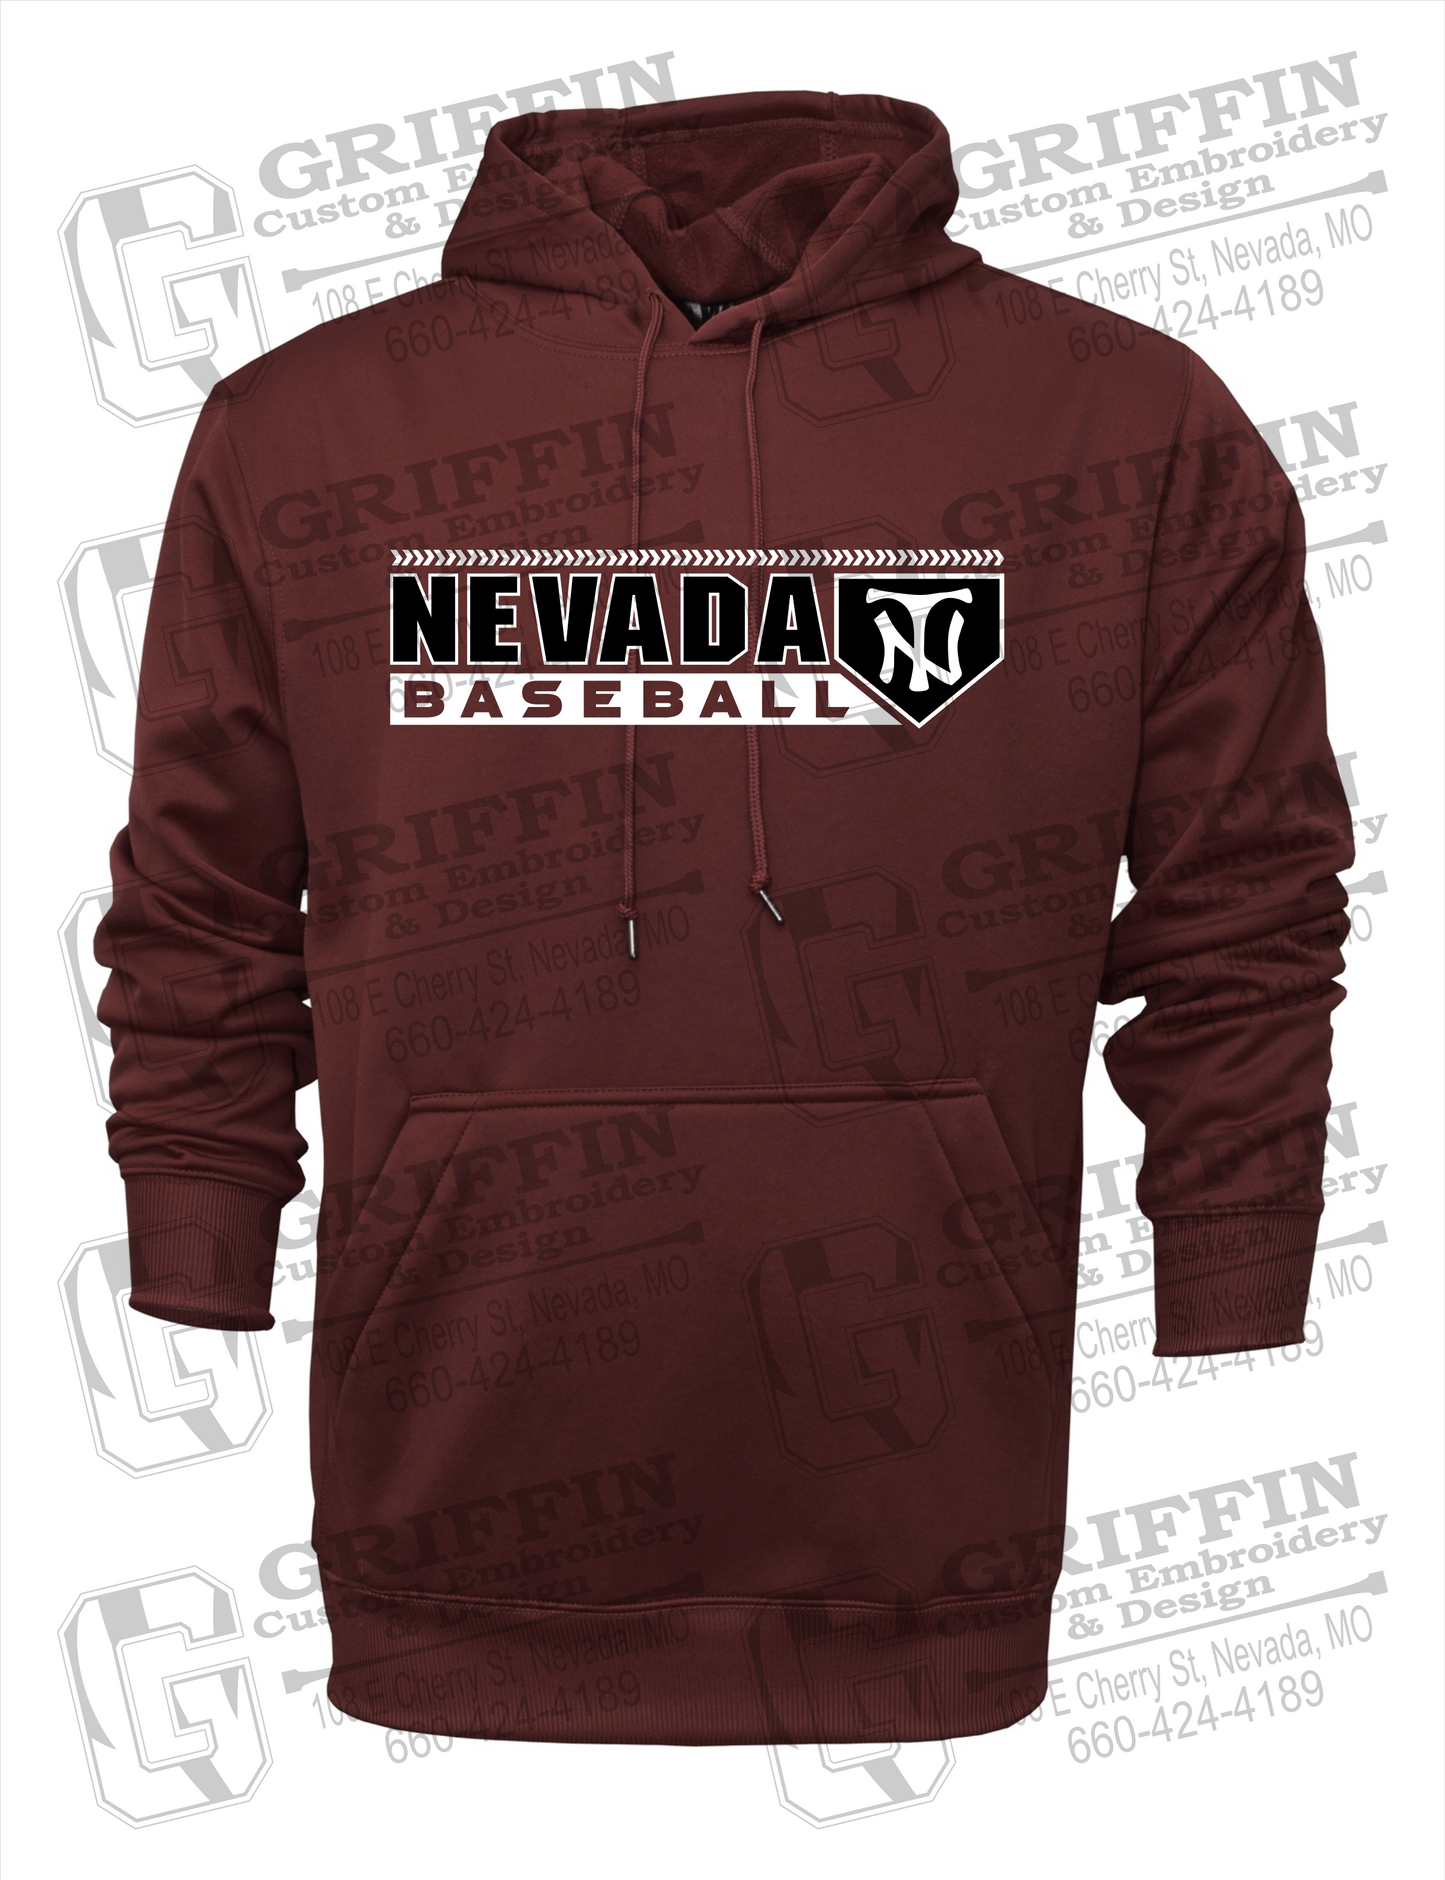 Nevada Tigers 24-Y Youth Hoodie - Baseball